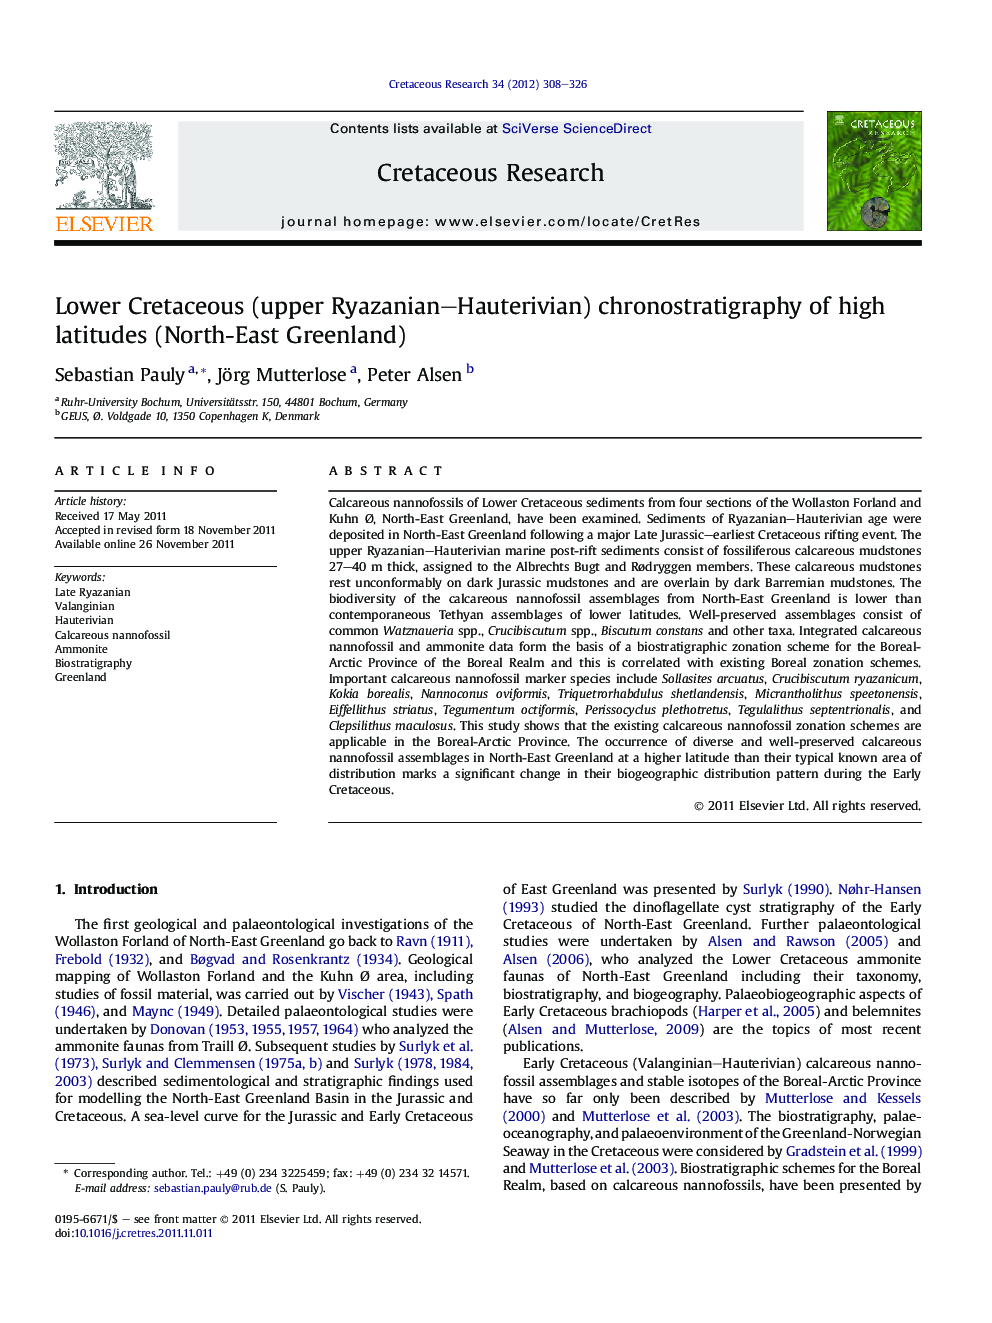 Lower Cretaceous (upper Ryazanian–Hauterivian) chronostratigraphy of high latitudes (North-East Greenland)